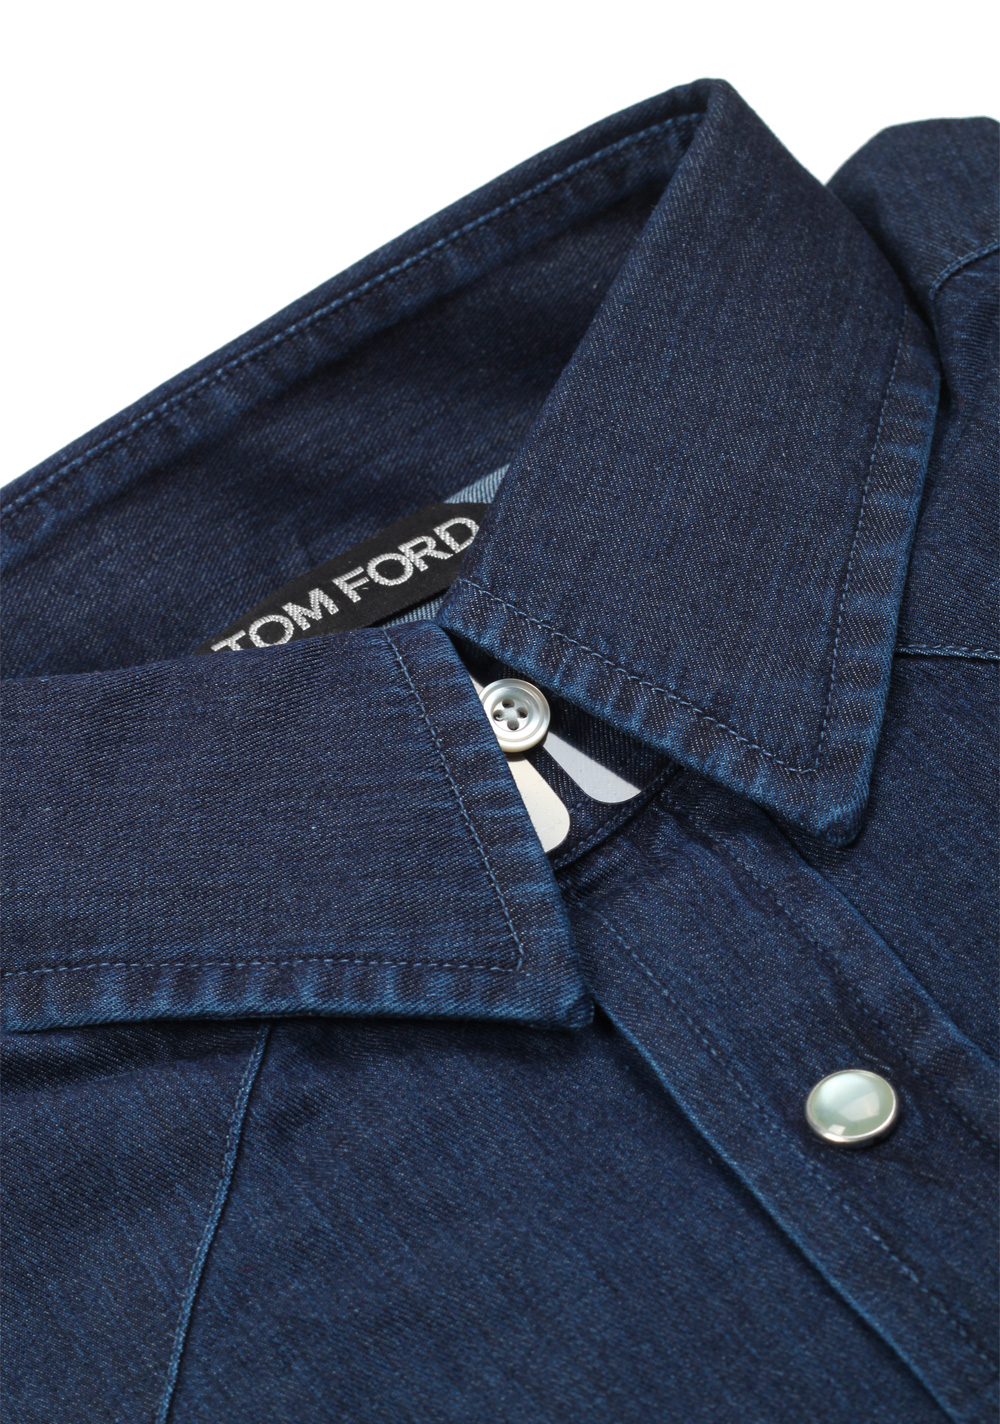 TOM FORD Solid Blue Denim Western Casual Shirt Size 38 / 15 U.S. | Costume Limité